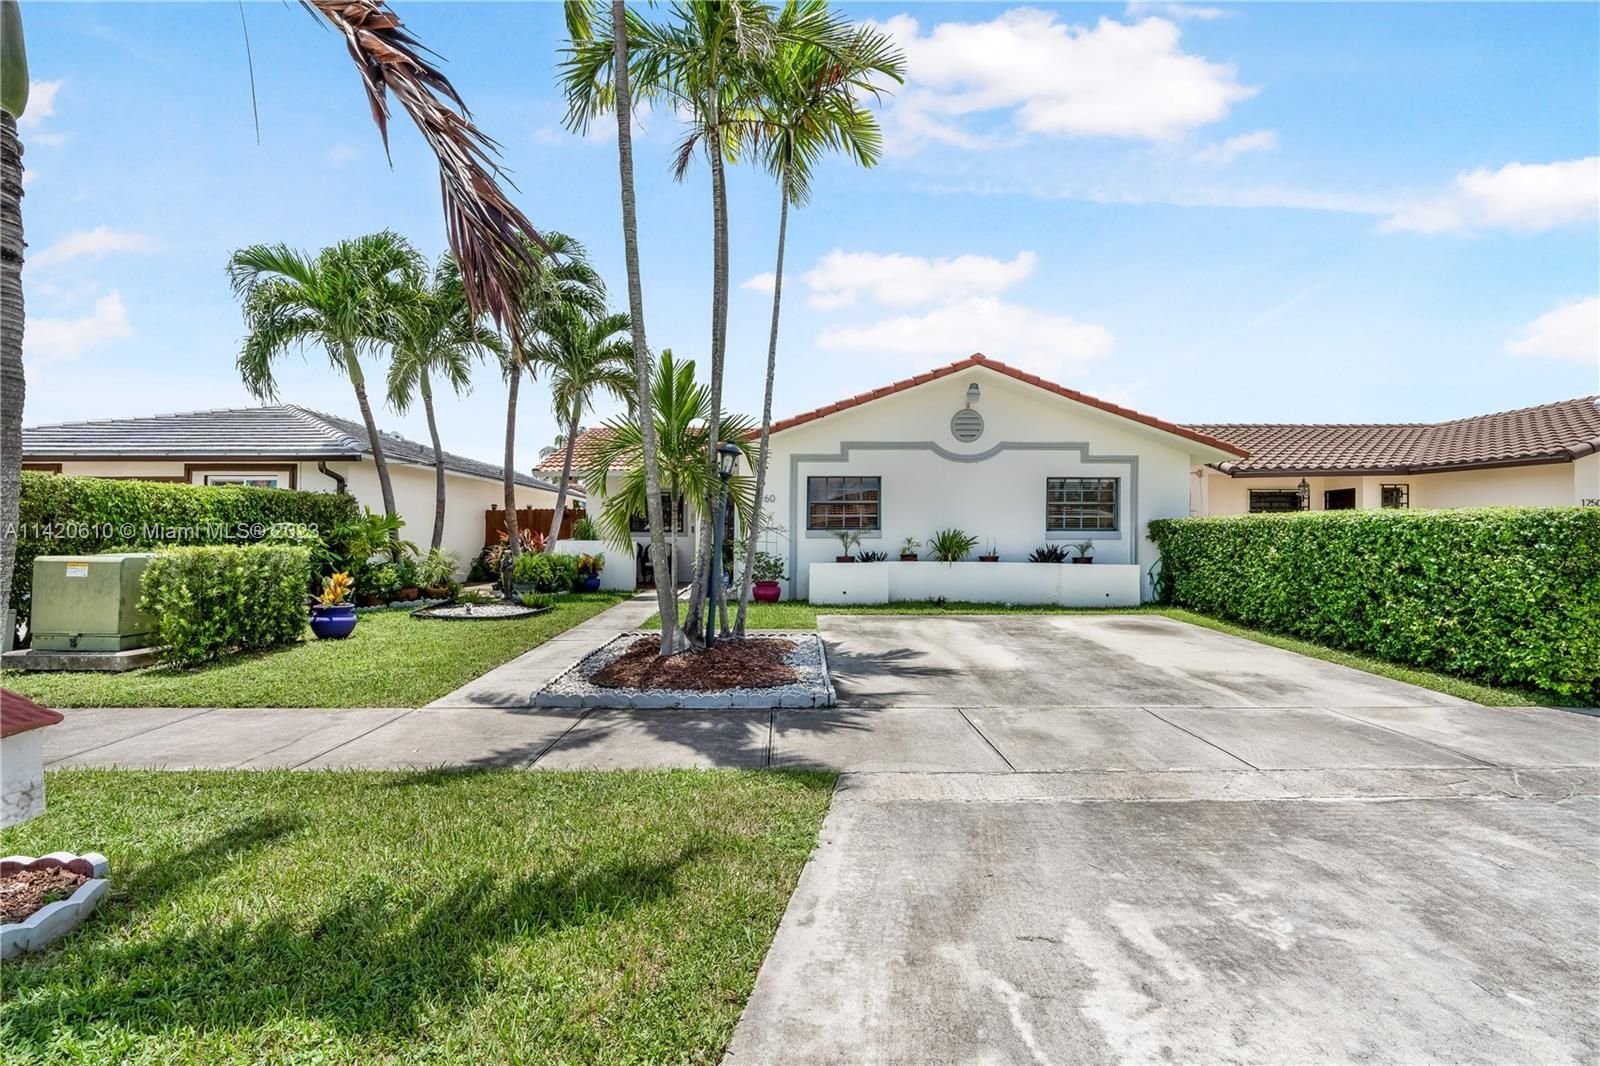 Real estate property located at 1260 138th Ave, Miami-Dade County, Miami, FL